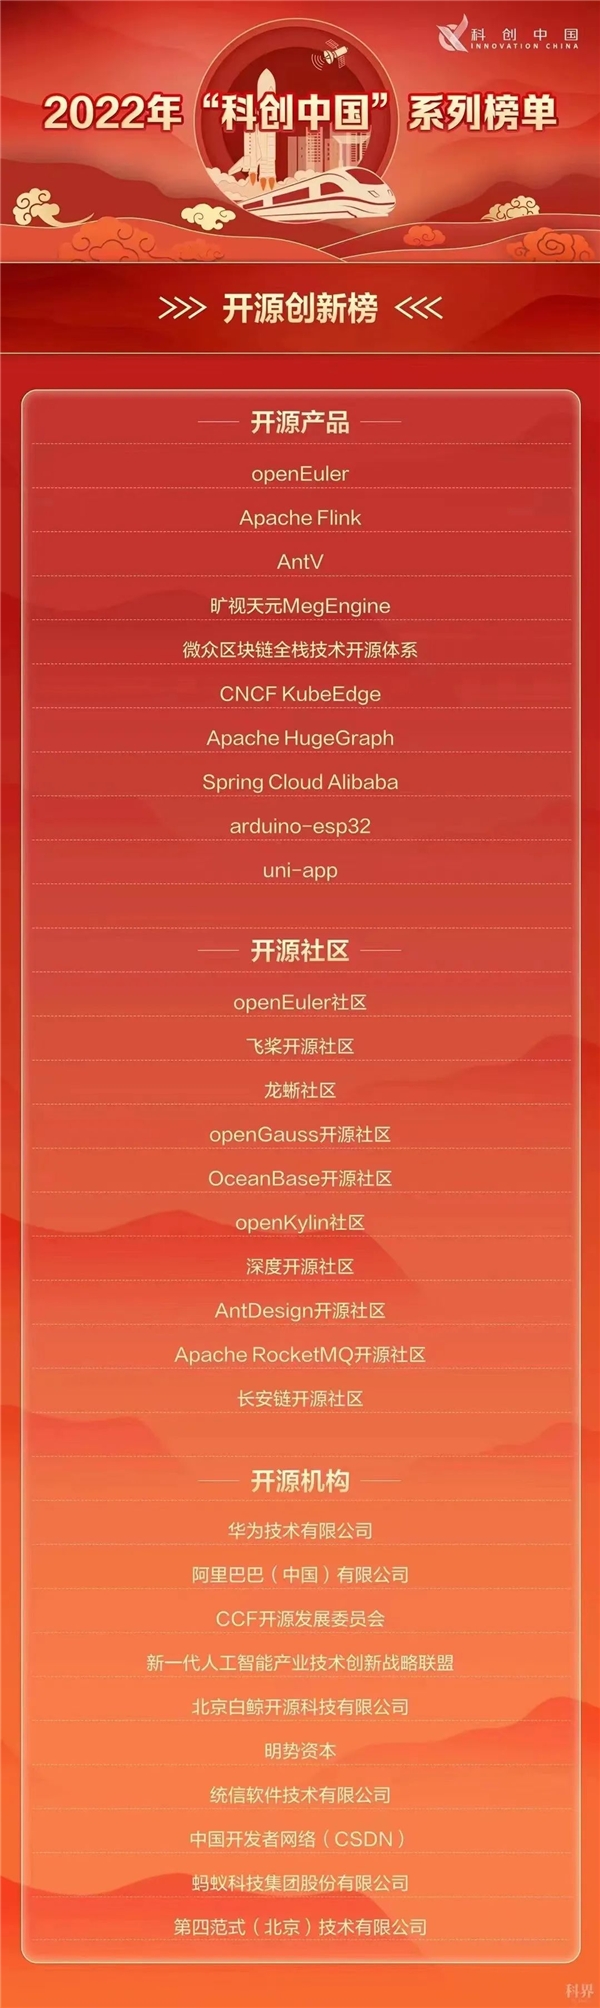 Apache Flink 入选 2022 年“科创中国”开源创新榜(图2)